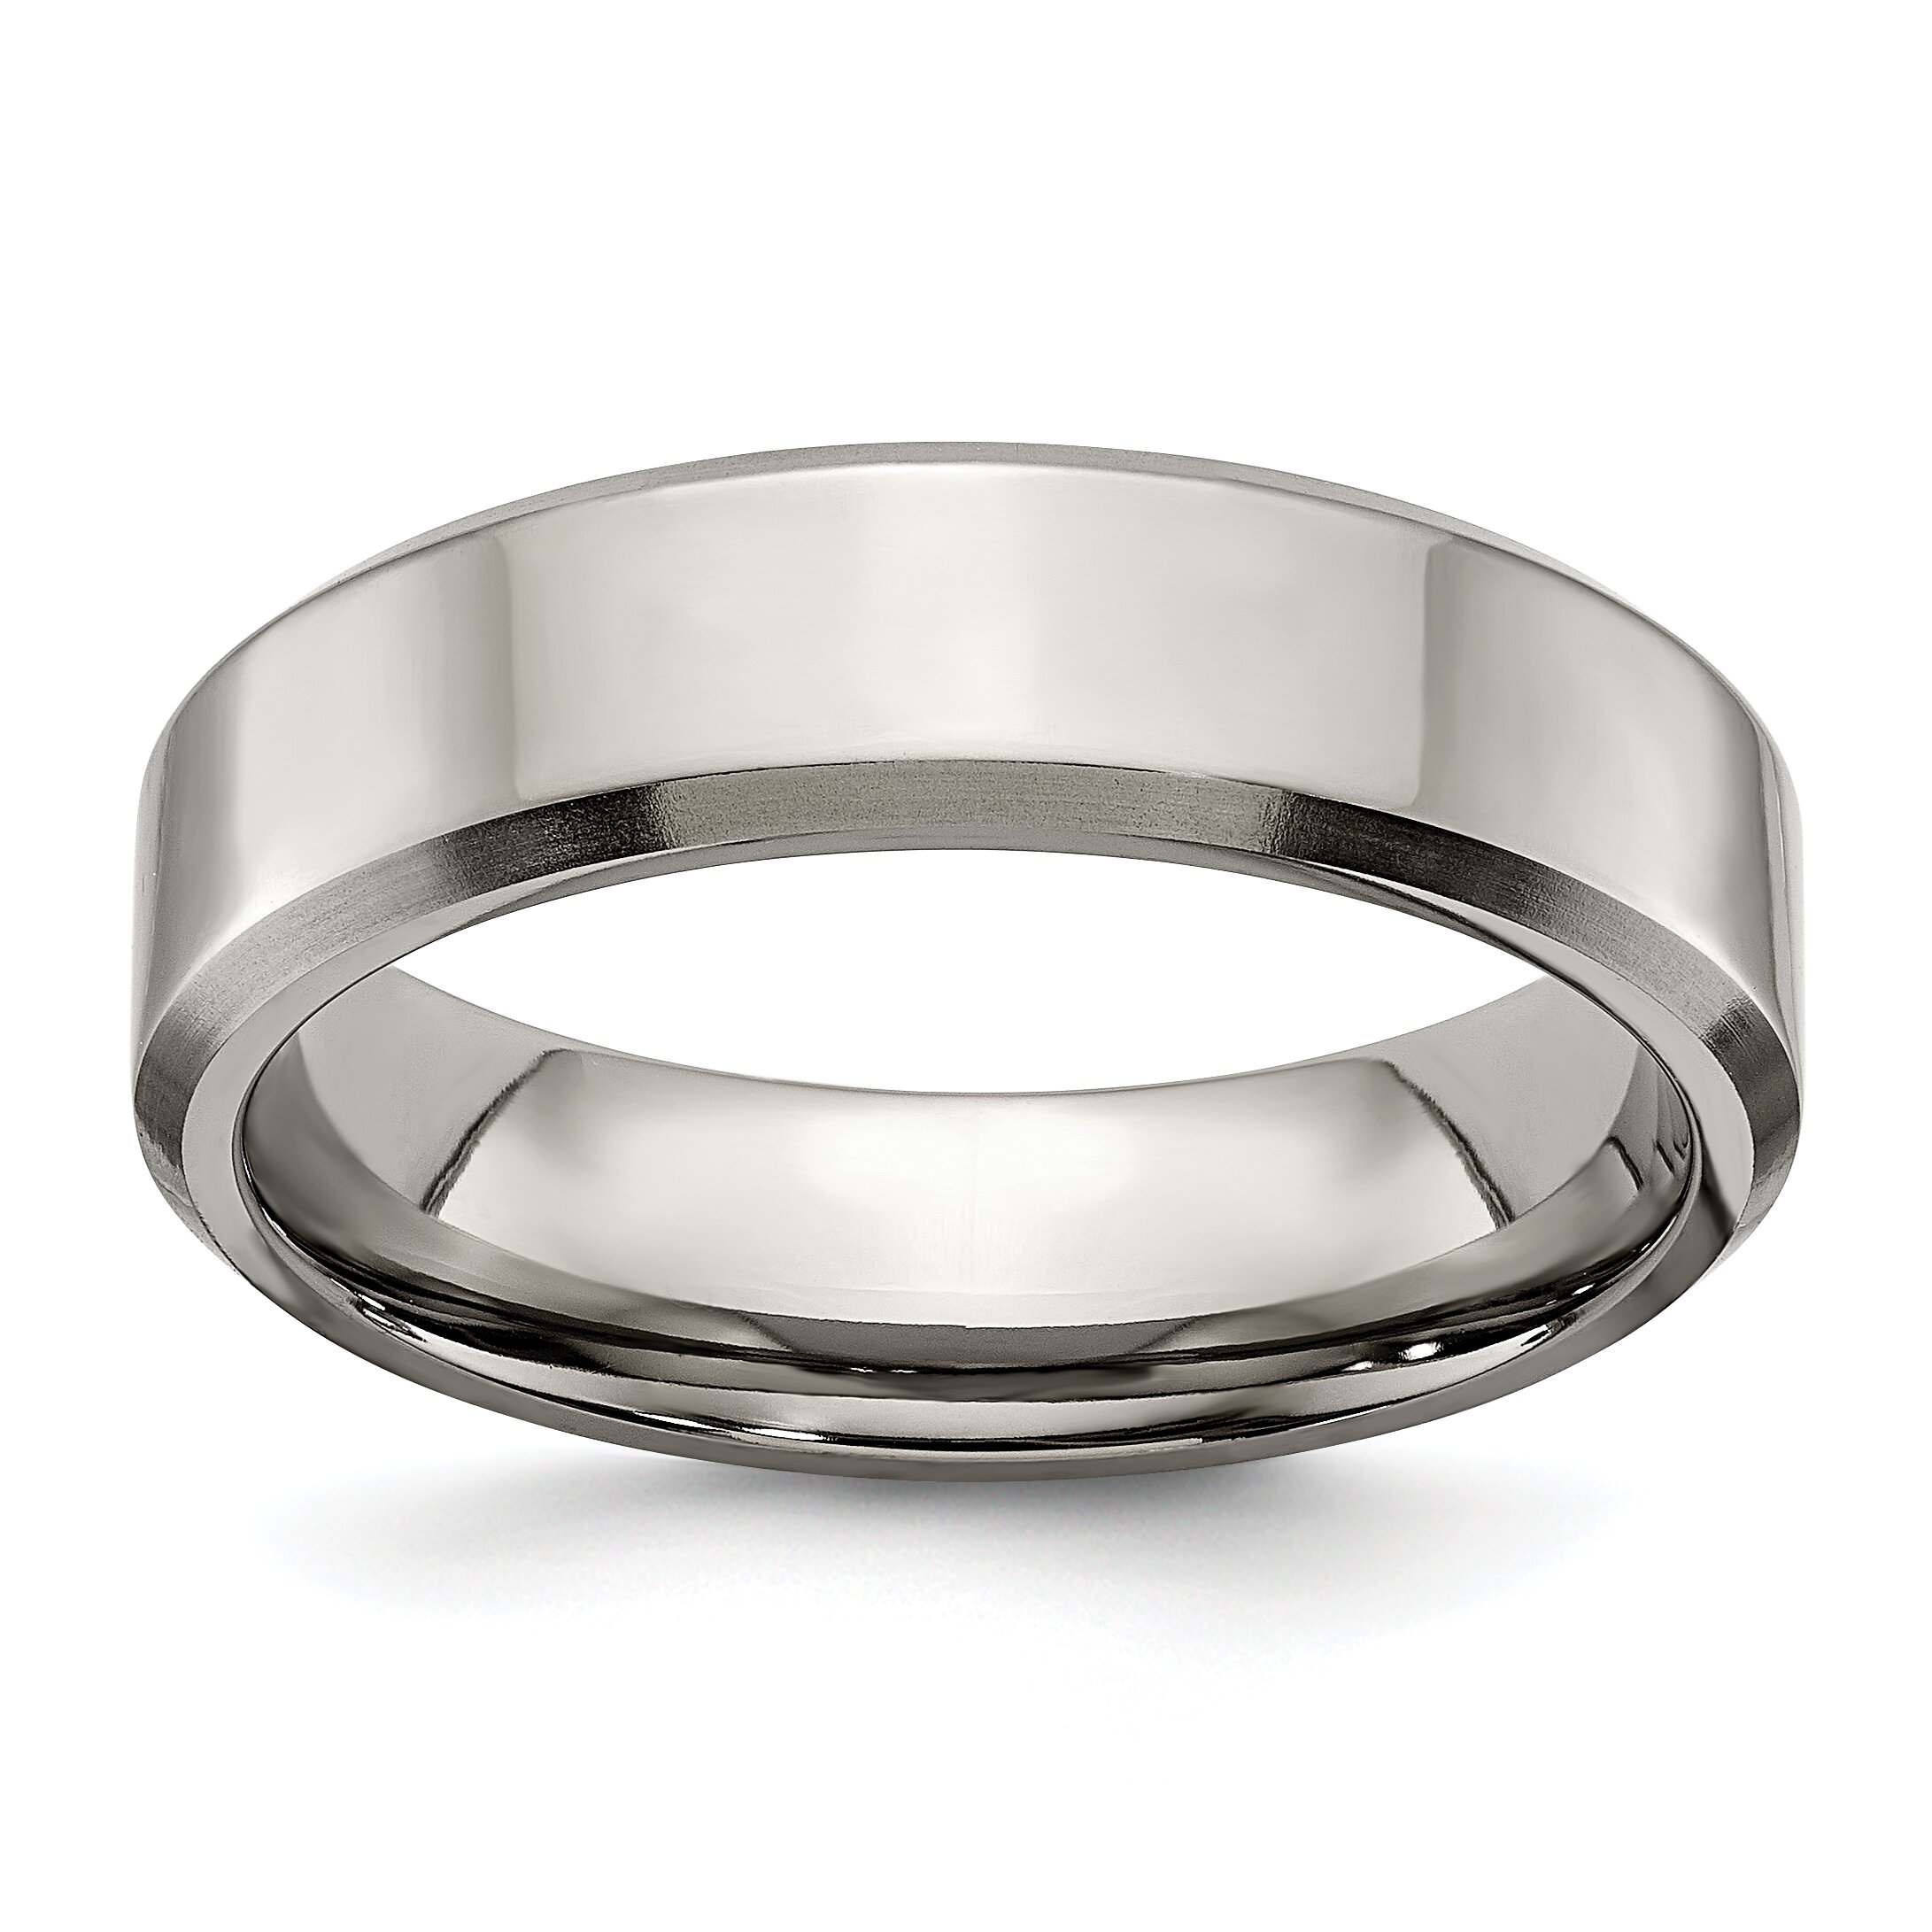 Findingking Titanium 6mm Brushed Mens Wedding Ring Band Size 8